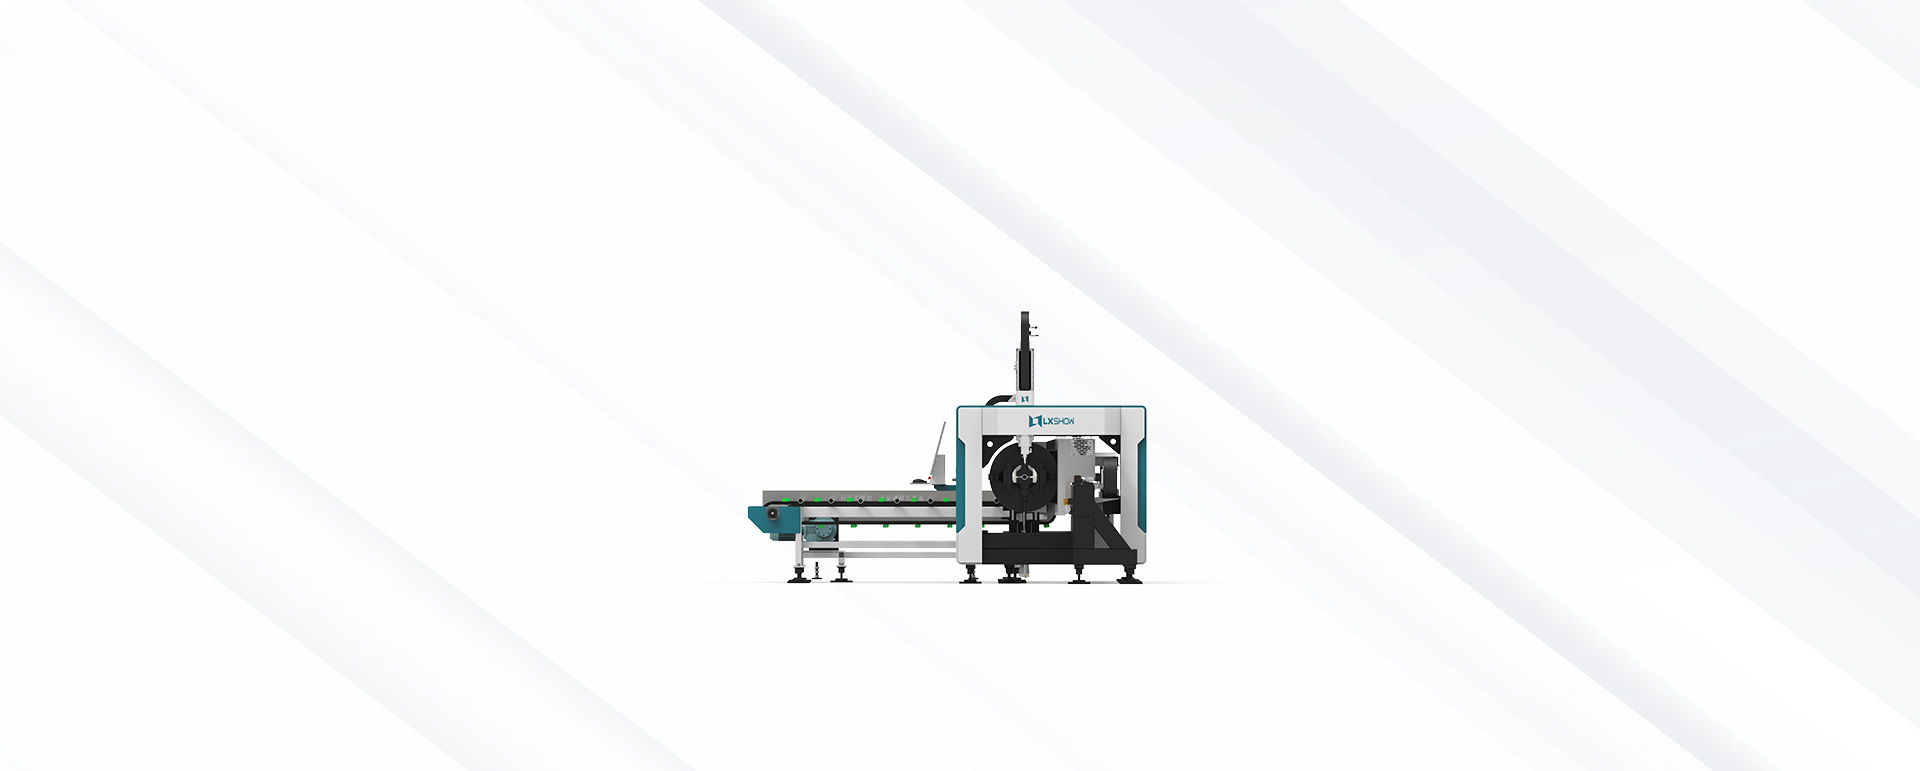 cnc laser tube cutting machine